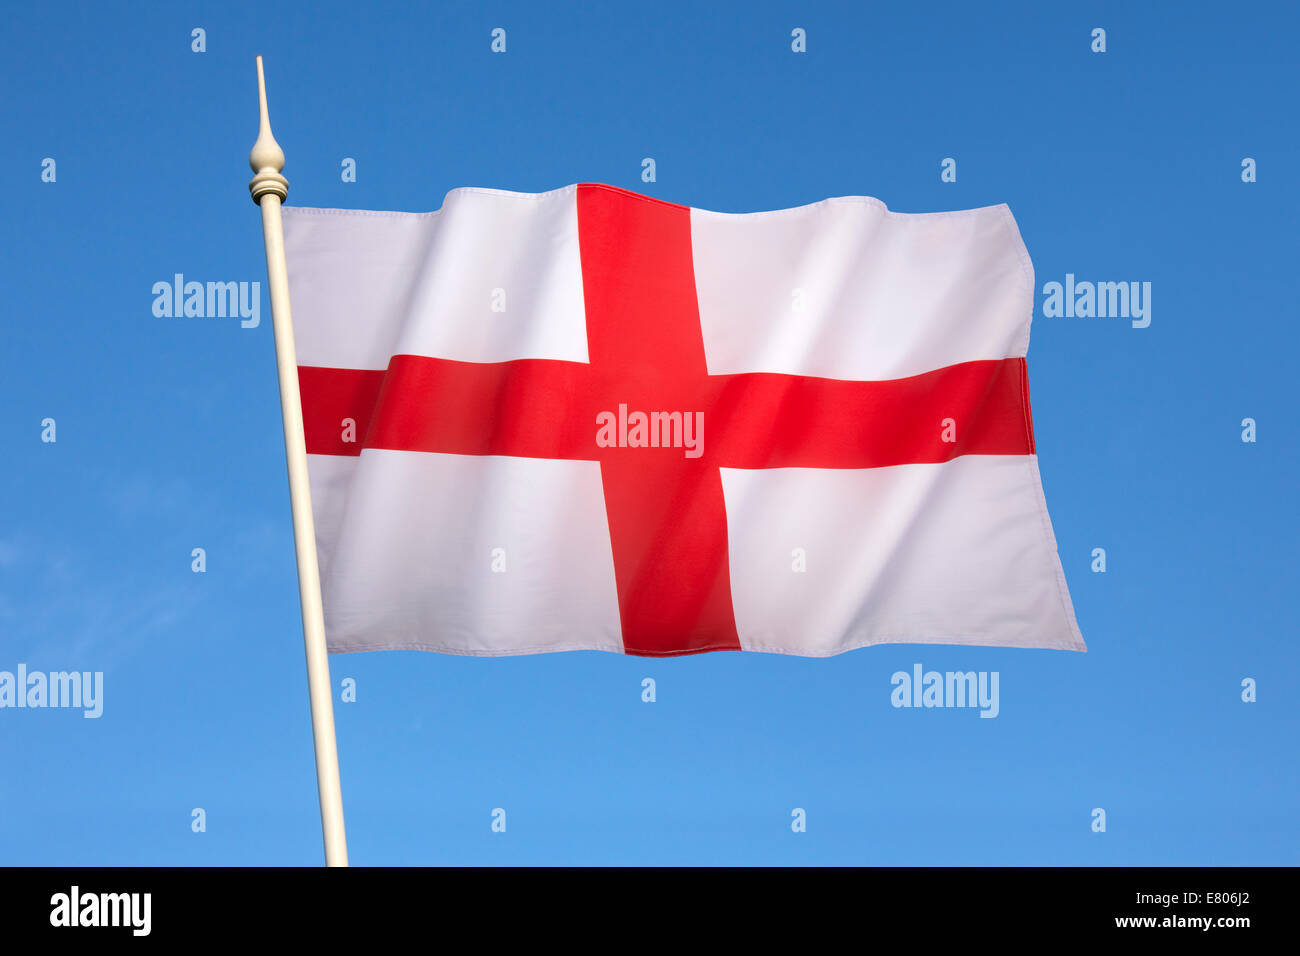 The flag of England - United Kingdom Stock Photo